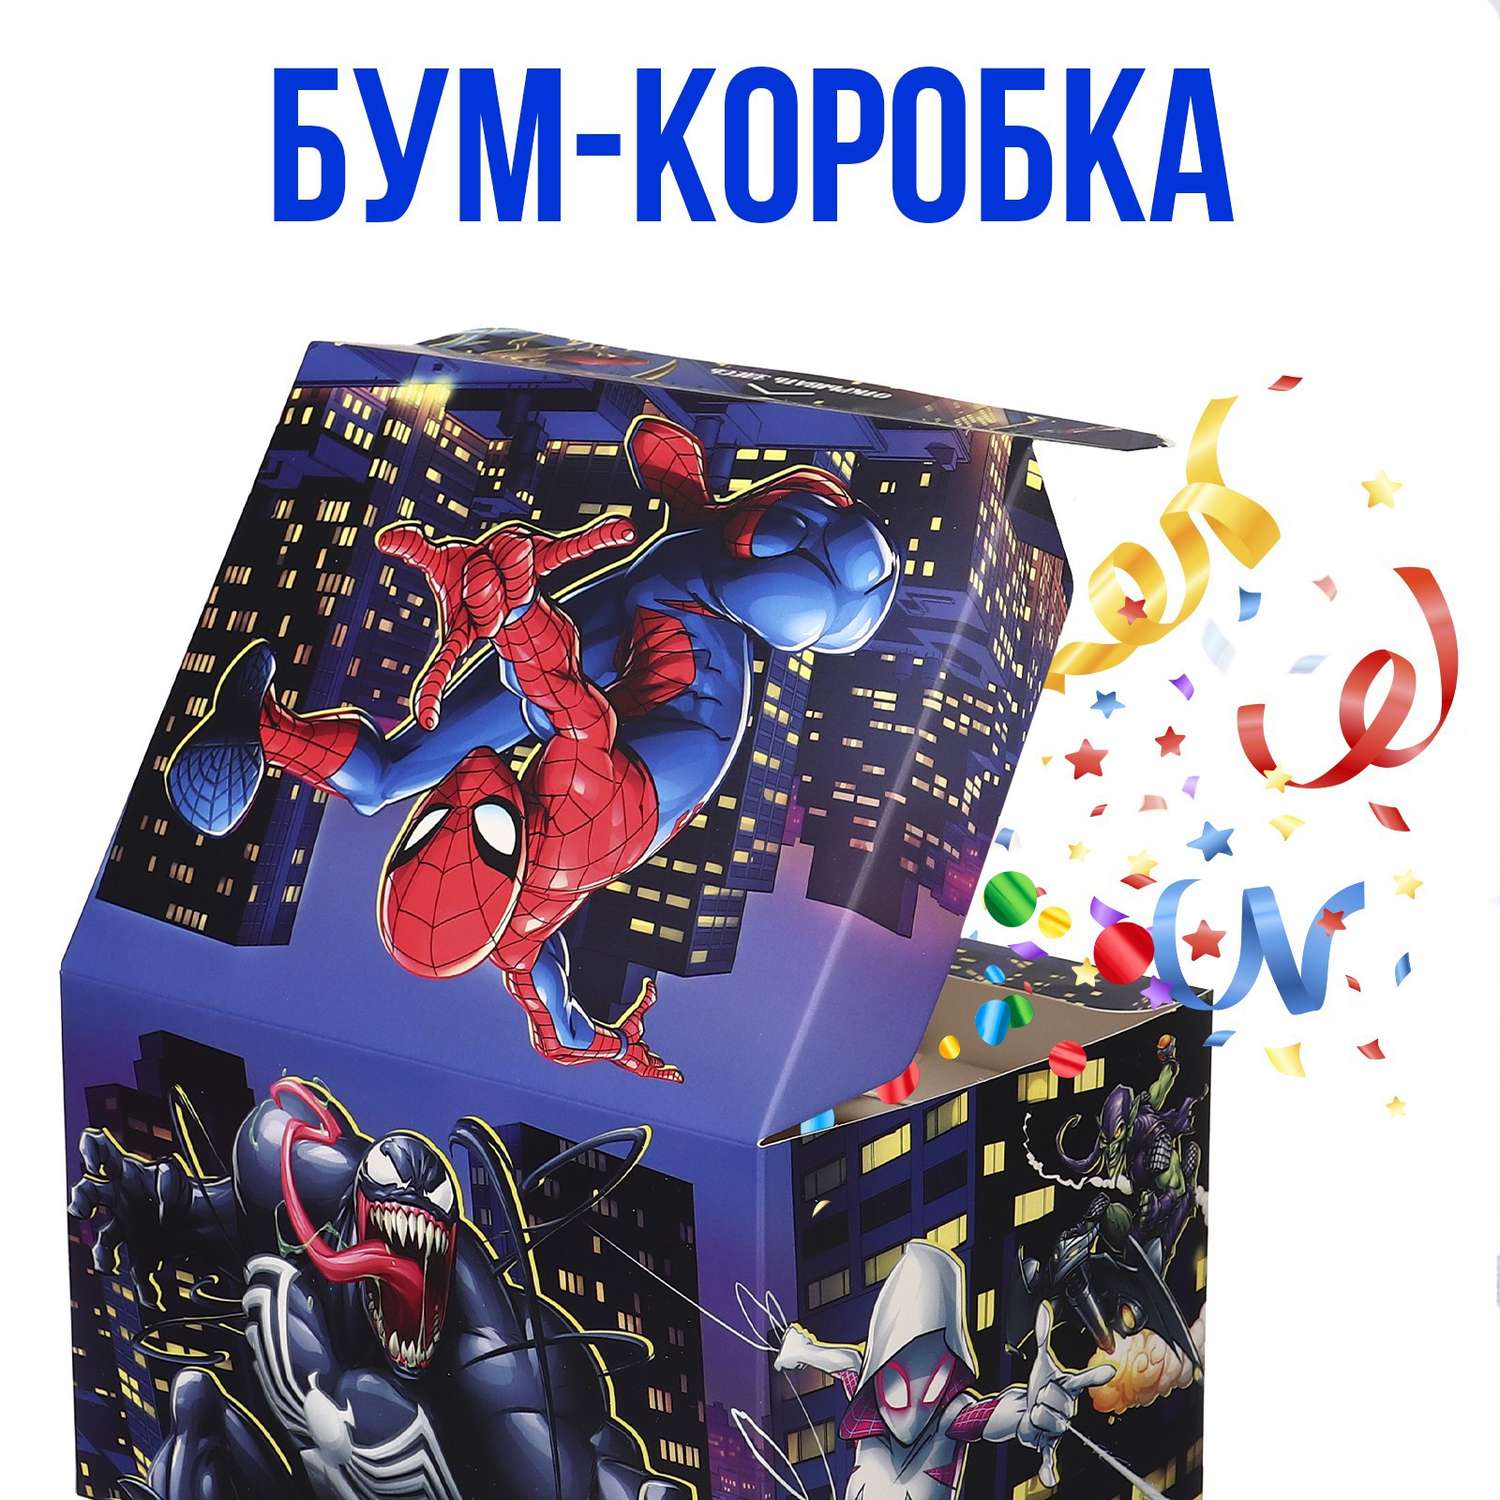 Коробка складная Marvel Бум сюрприз 20 х 15 х 12.5 см Человек-паук - фото 4